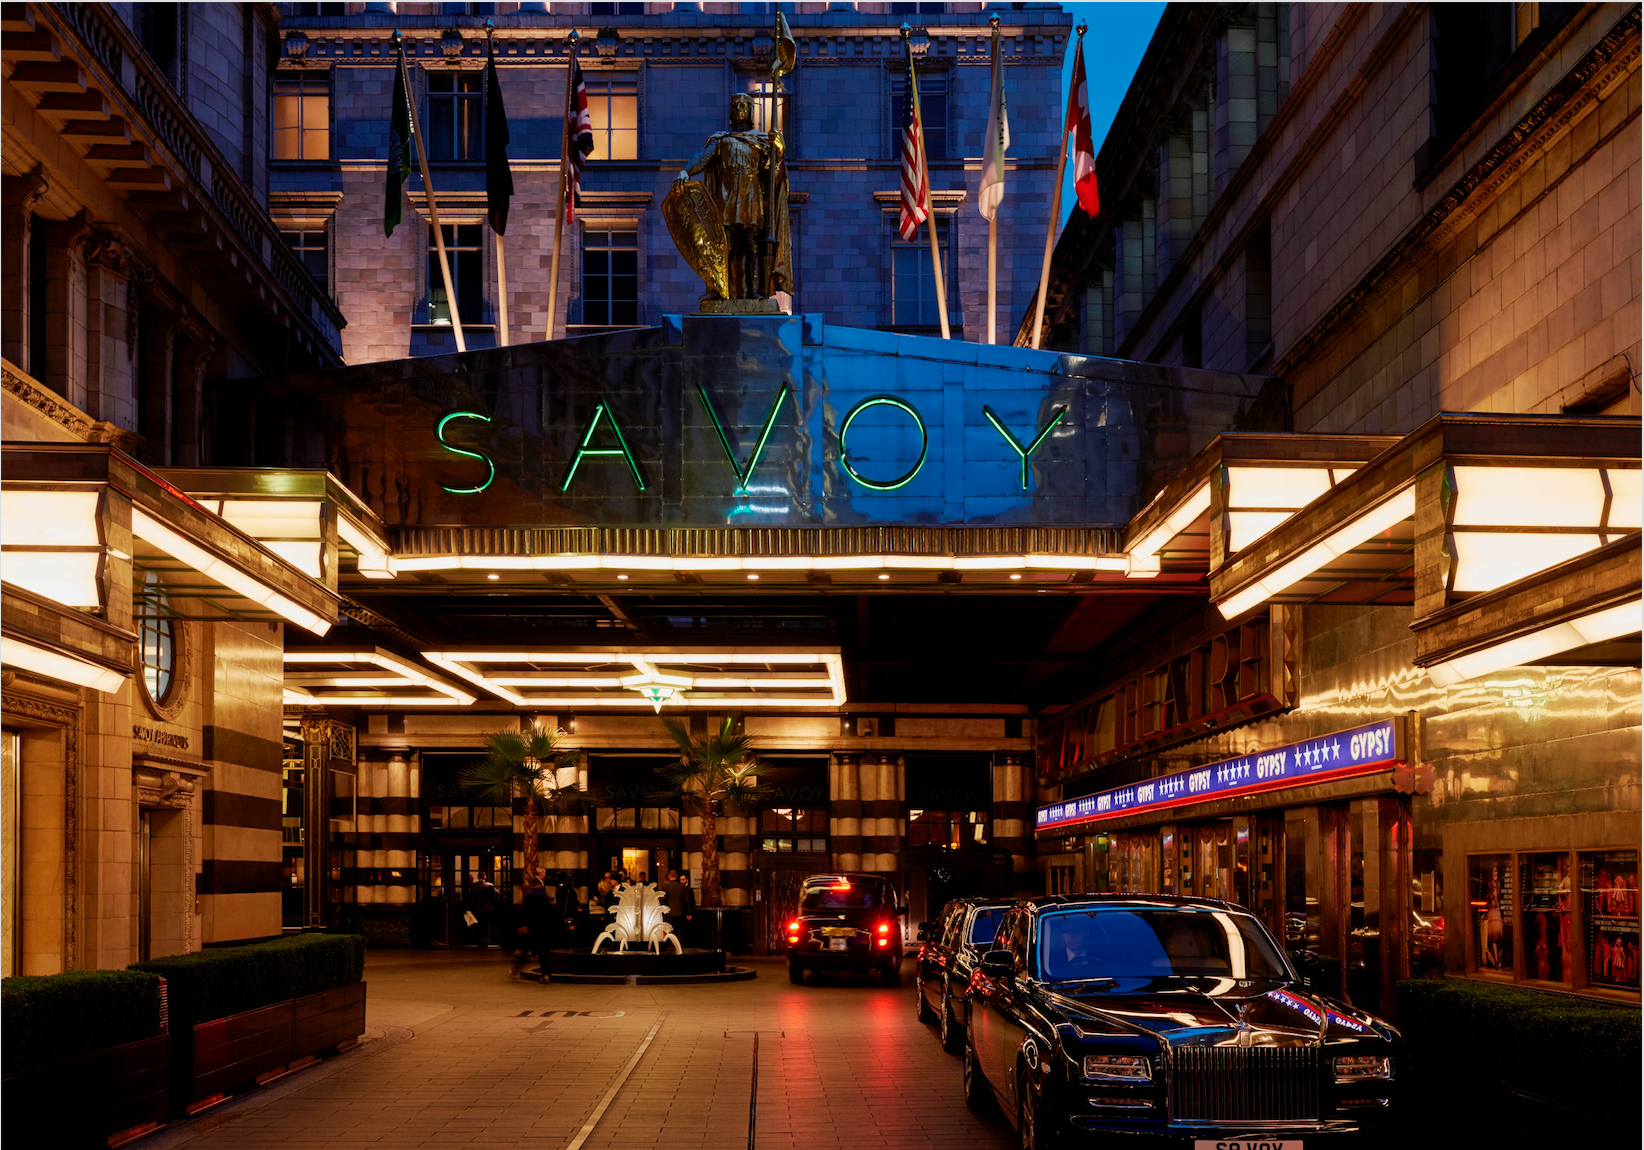 The Savoy, London, UK